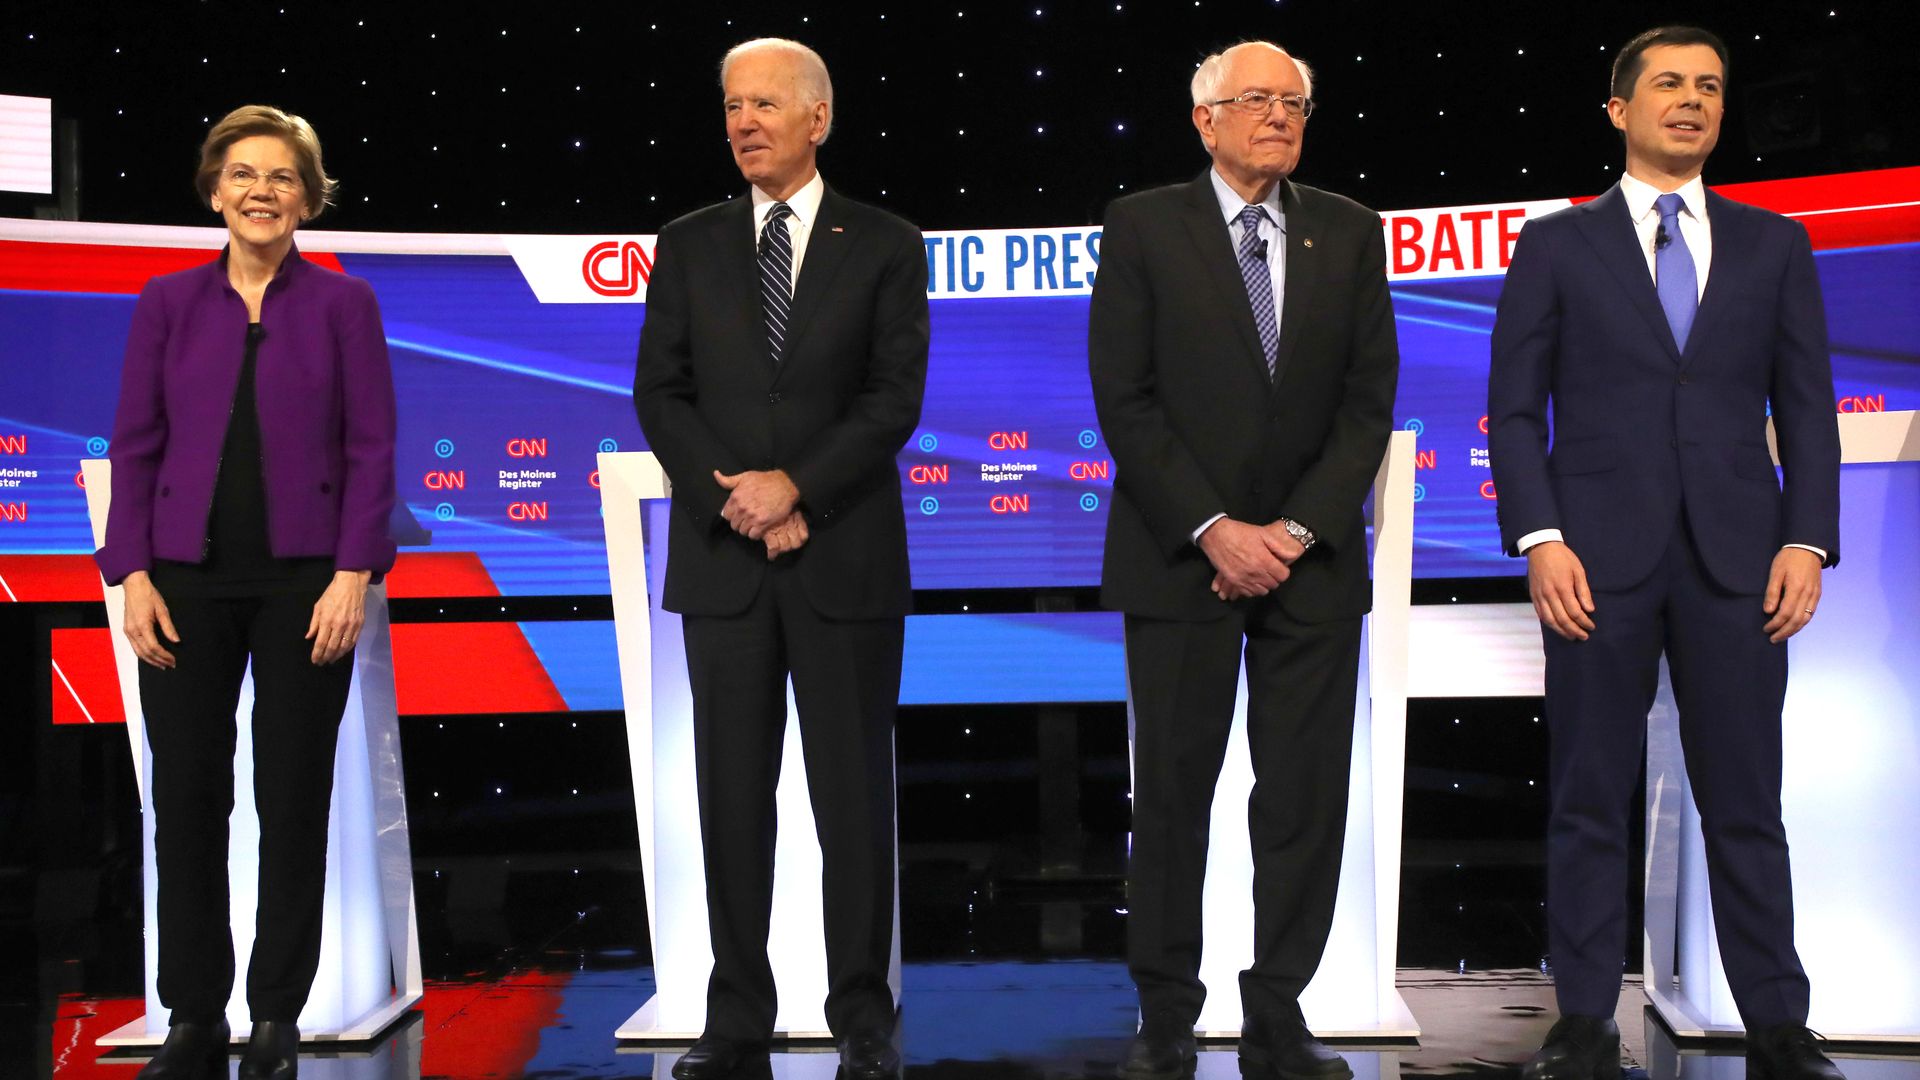 Warren, Biden, Sanders, and Buttigieg are in this image.